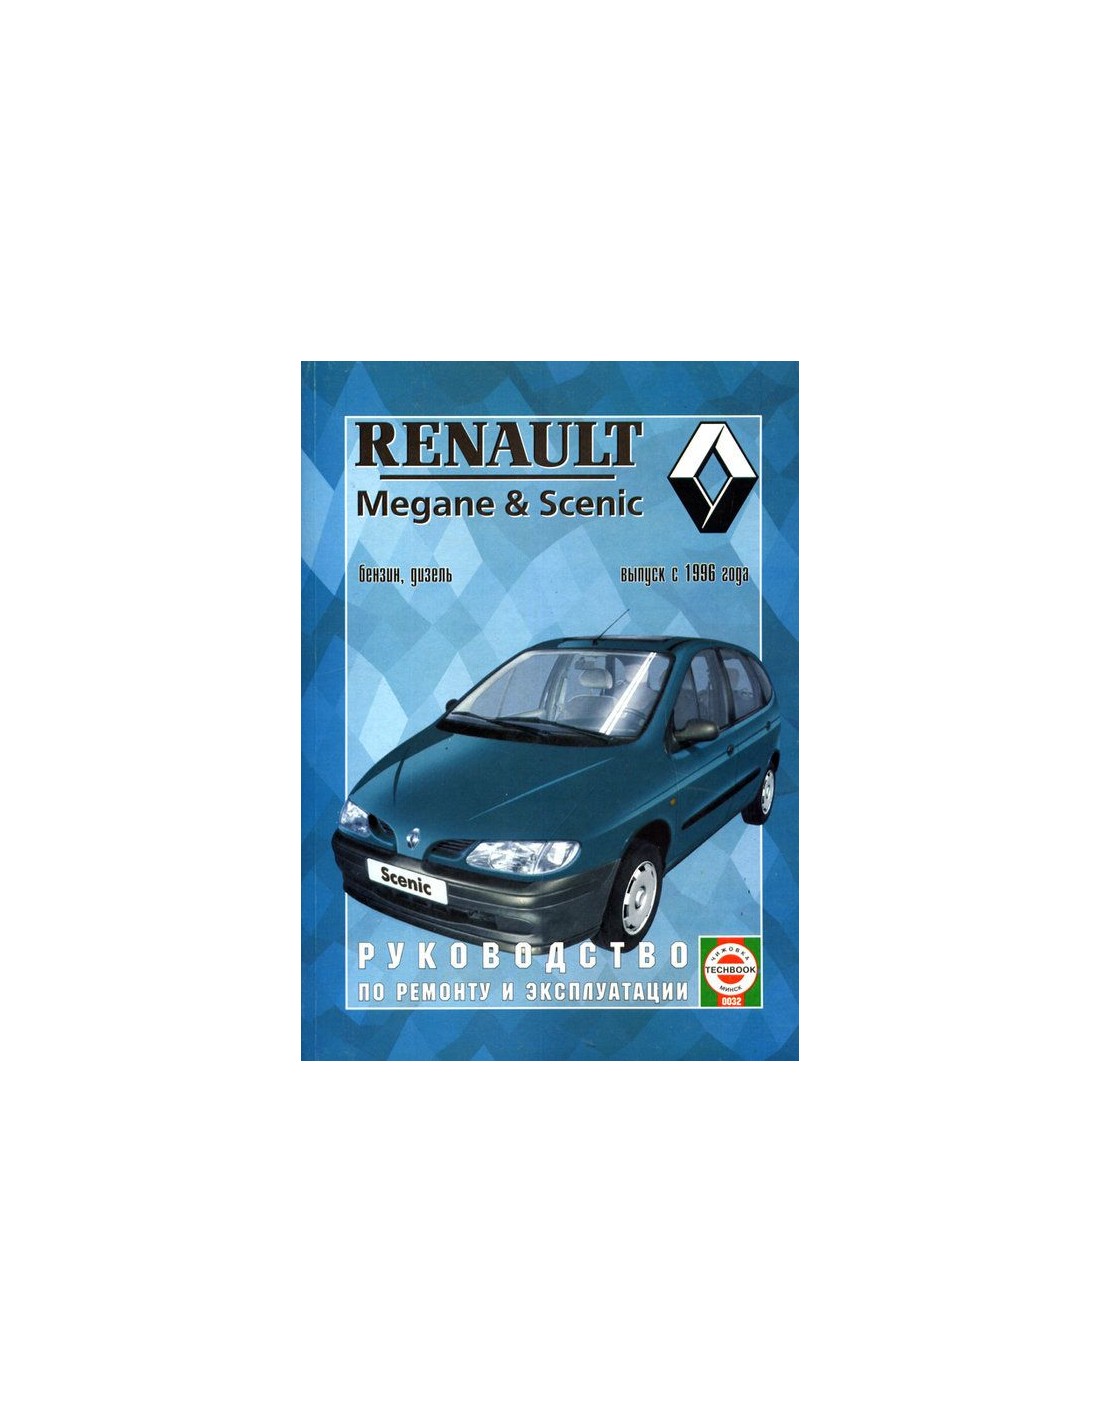 Инструкция по эксплуатации Renault Scenic III. Эксплуатация автомобиля Renault Scenic III